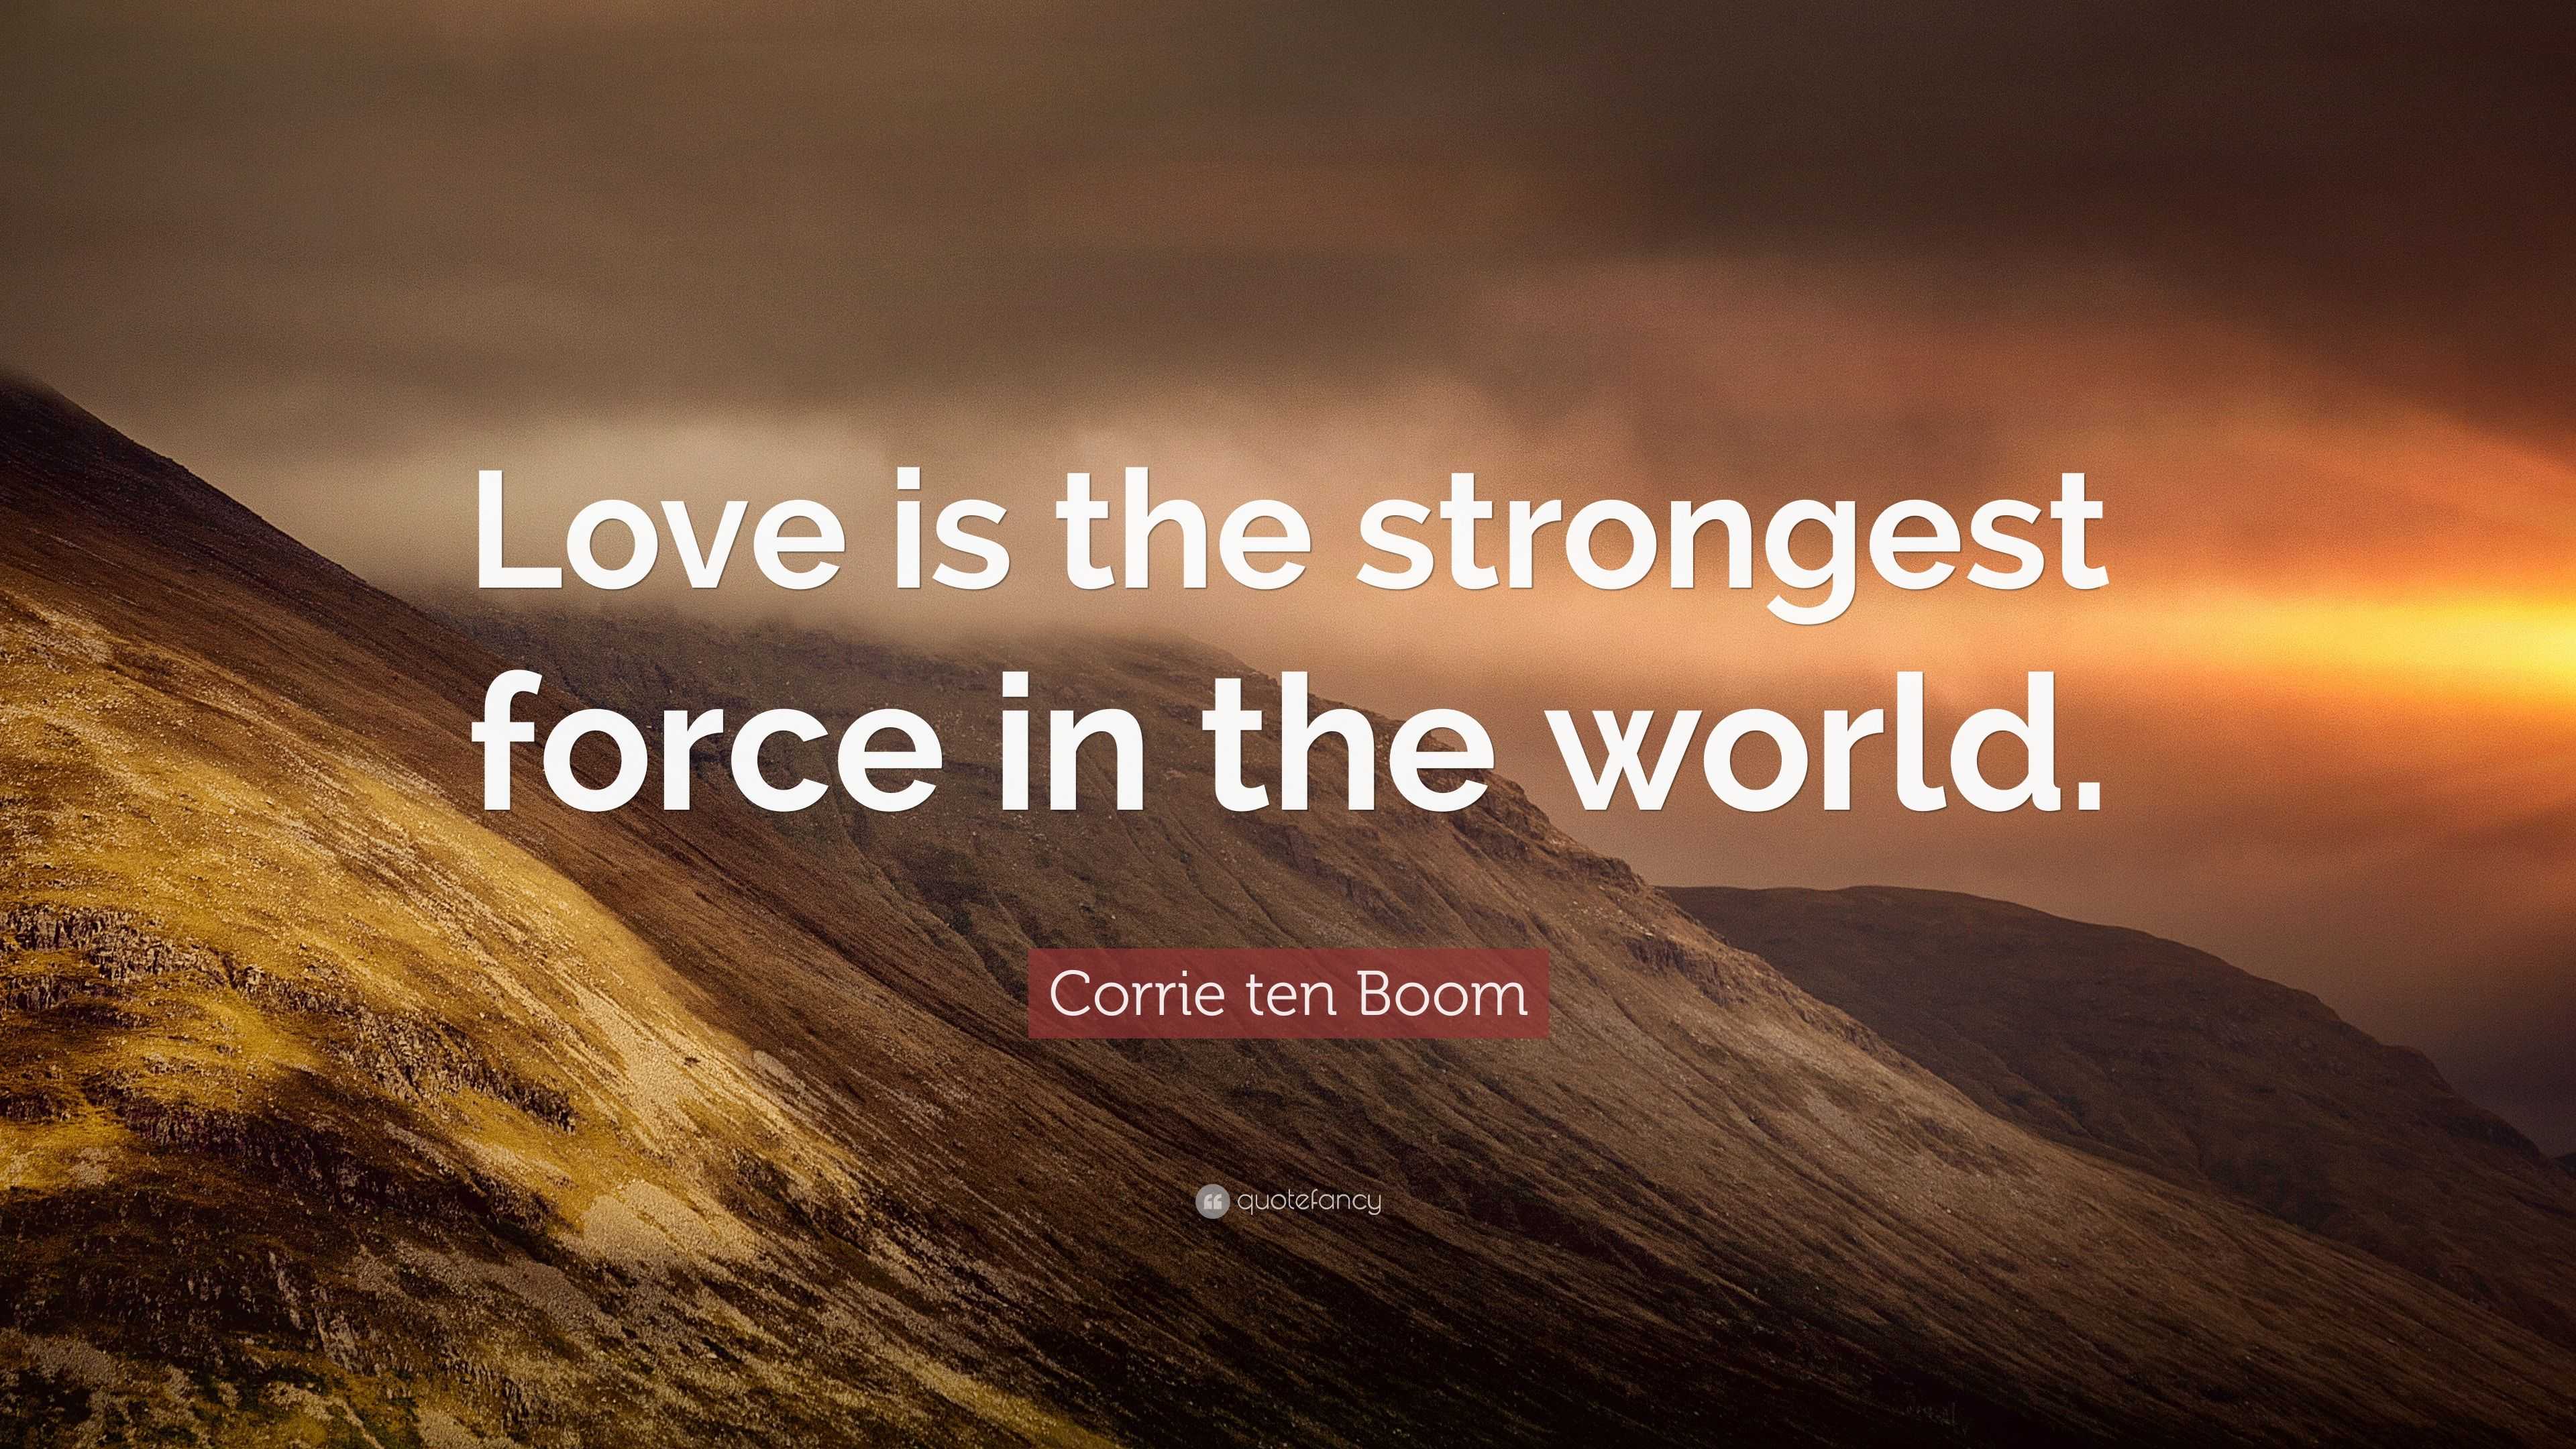 corrie ten boom quotes on love